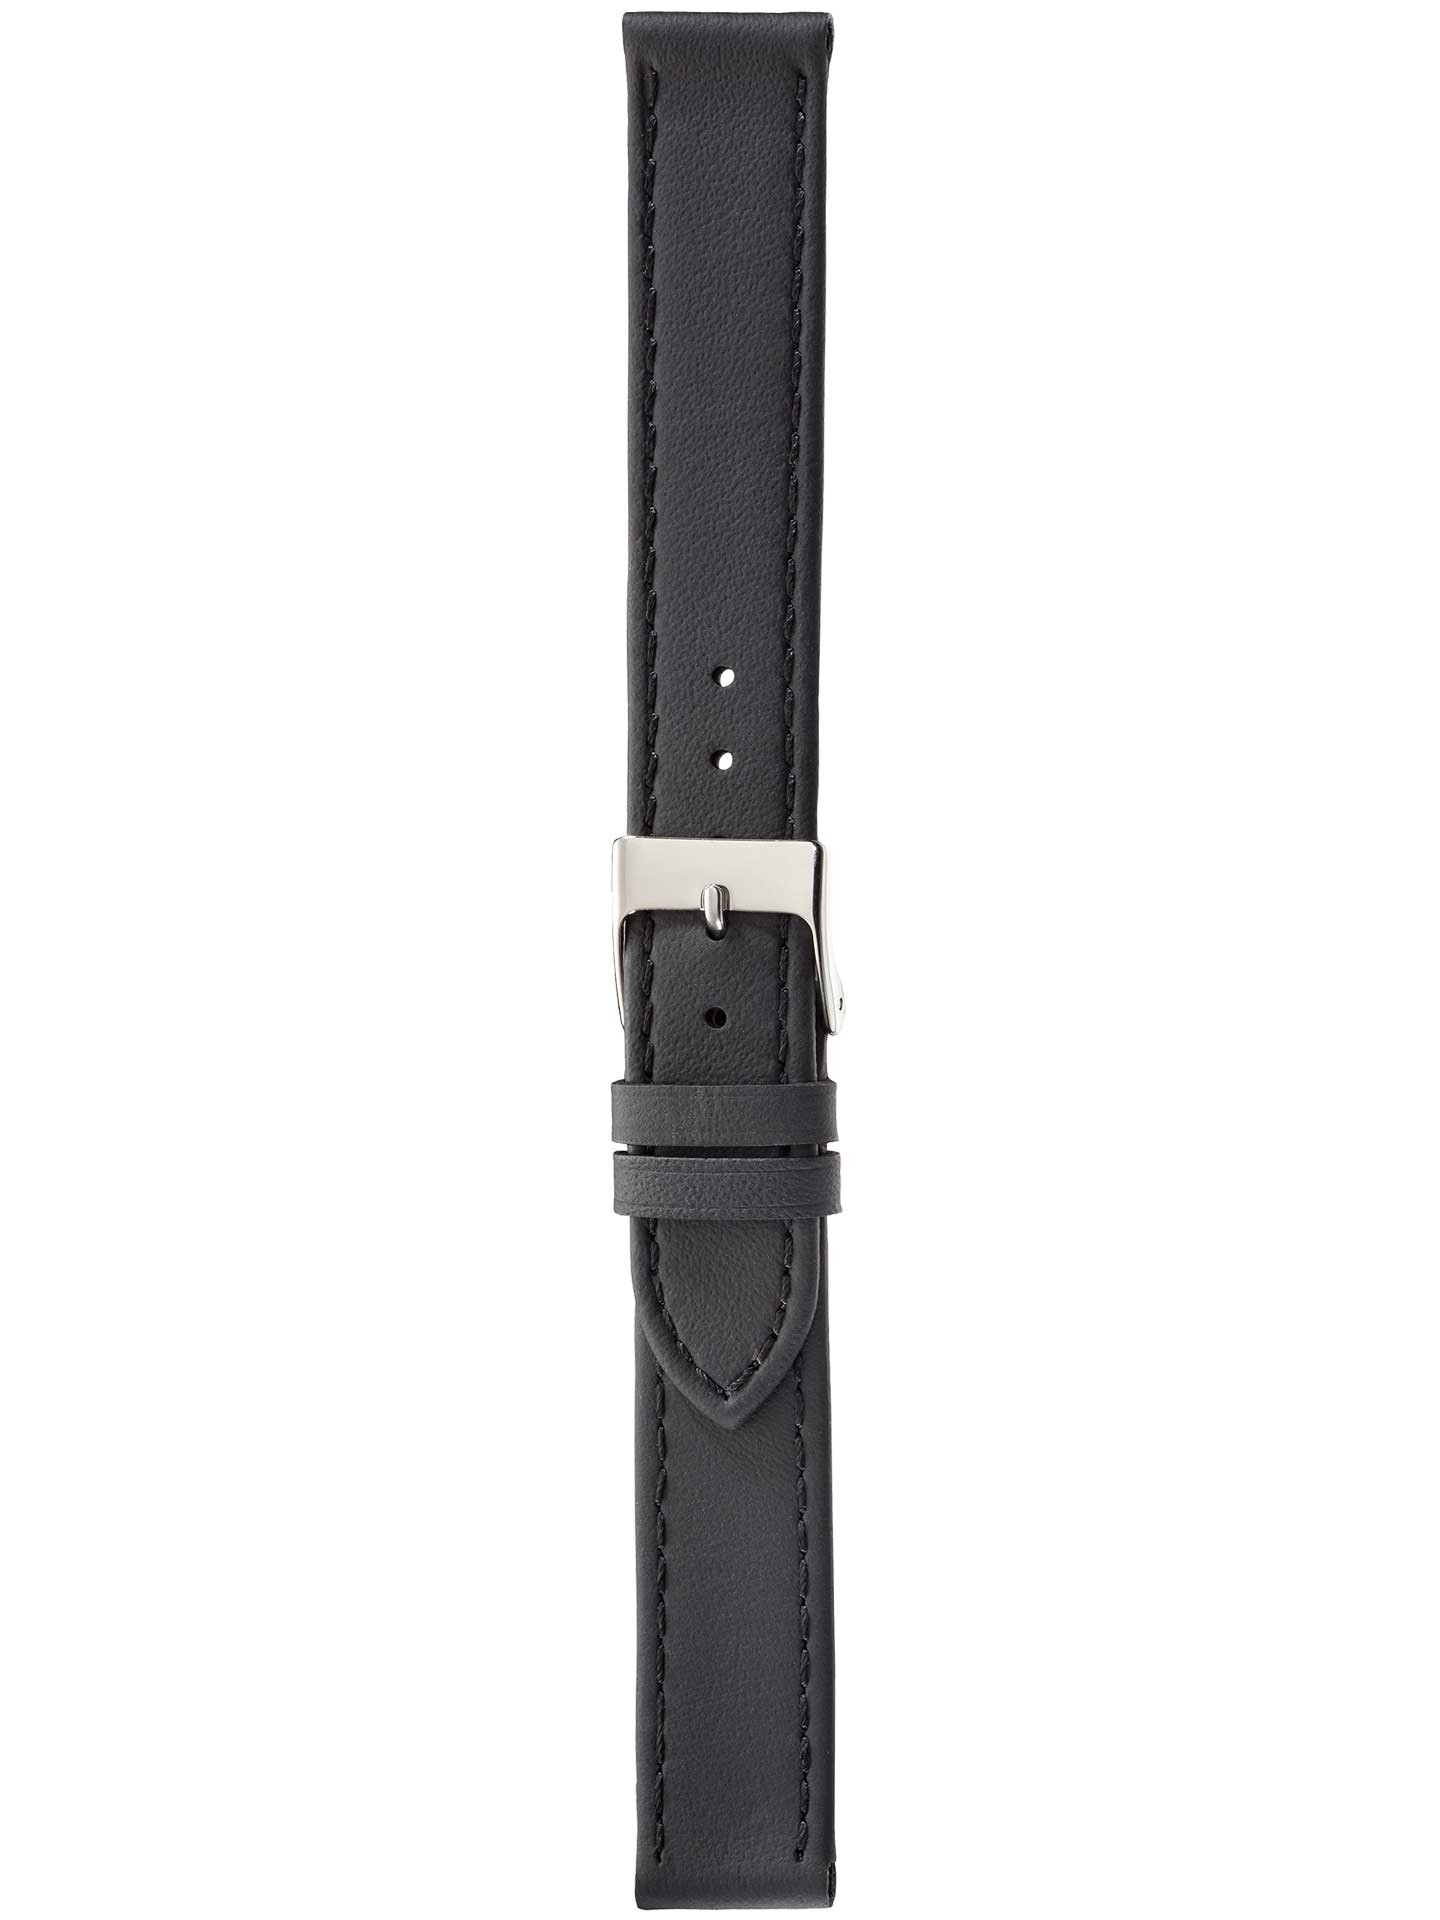 Lederband Aqua-Racer 16mm schwarz